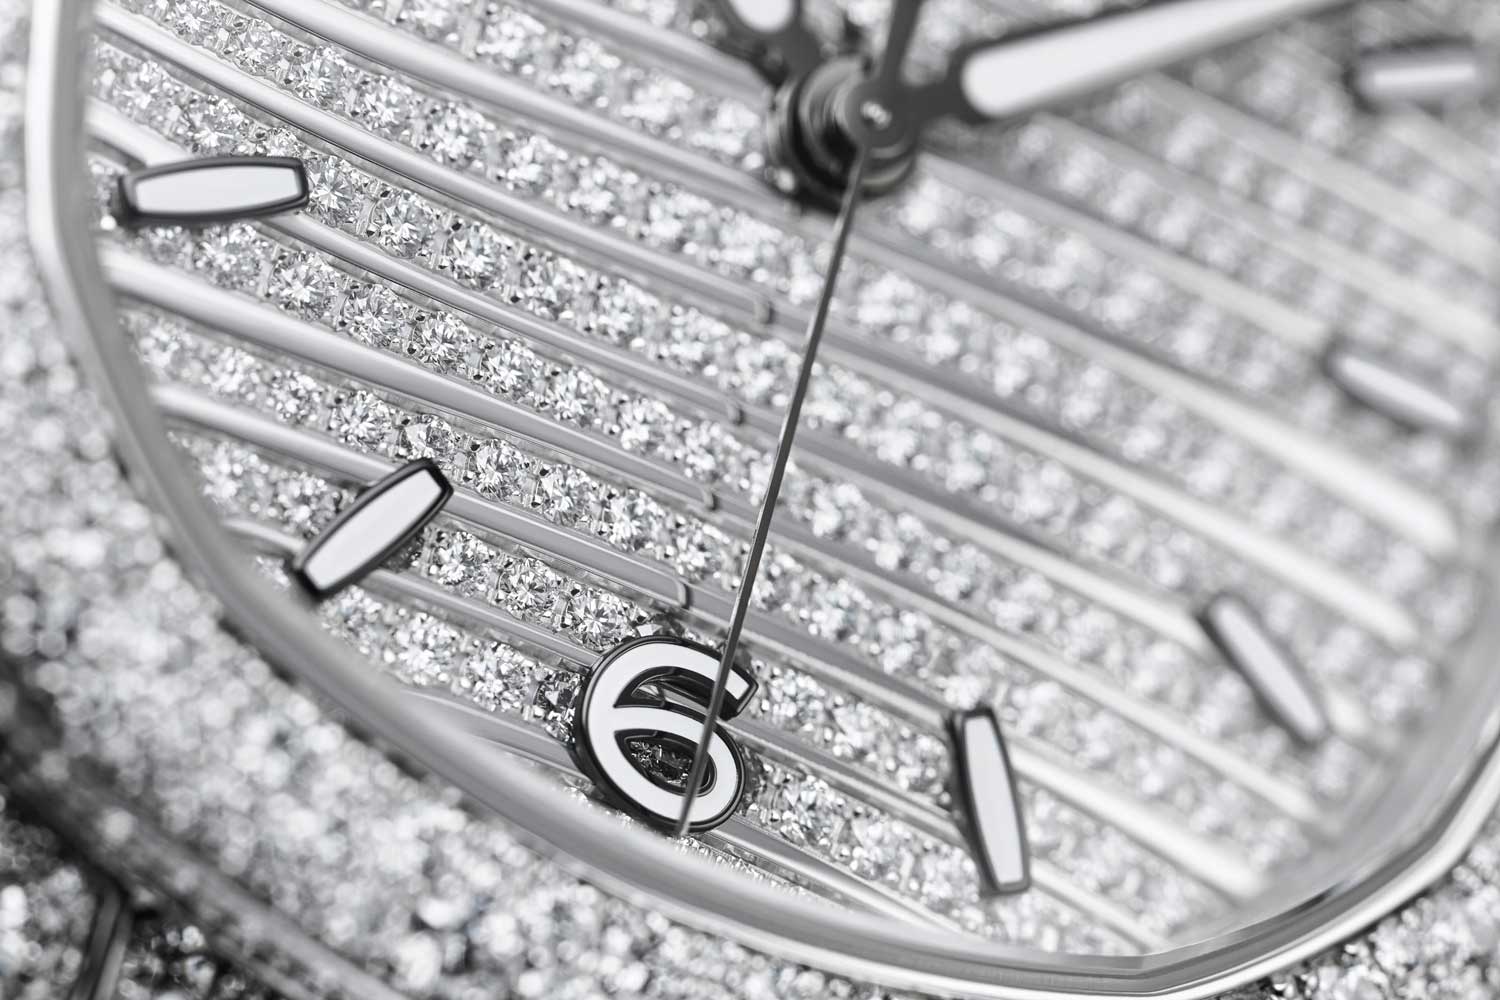 Patek Philippe’s new Ref. 7118/1450G Nautilus Haute Joaillerie sparkles with 2553 flawless Top Wesselton brilliant-cut diamonds